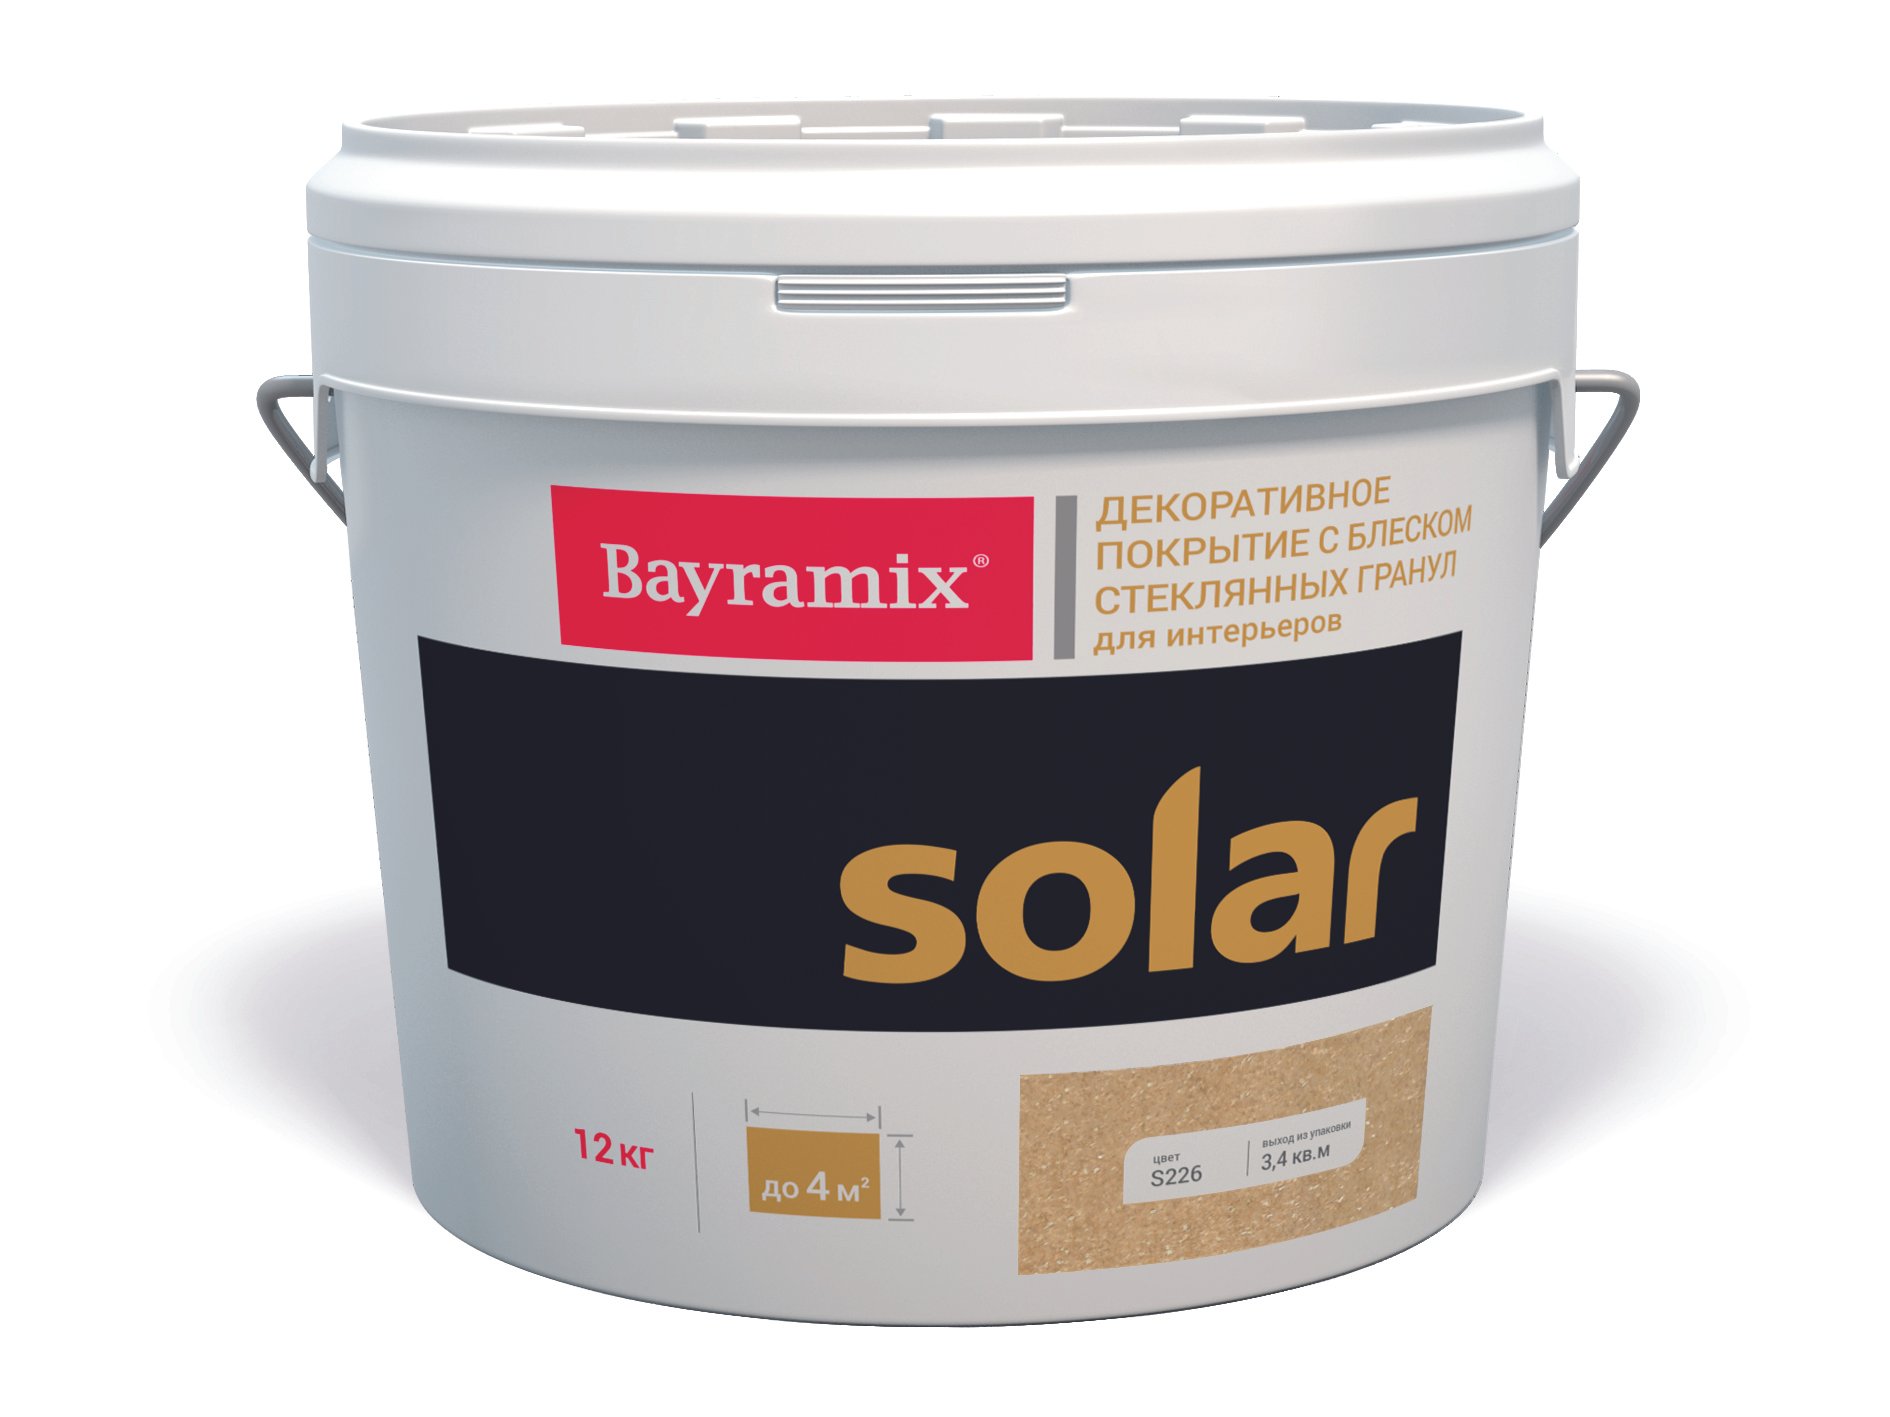 Декоративная шукатурка со стекл. гранулами Bayramix Solar S261 миндаль, 12 кг краска bayramix cristal air stopvirus база а bcas 027 4 кг 2 7 л